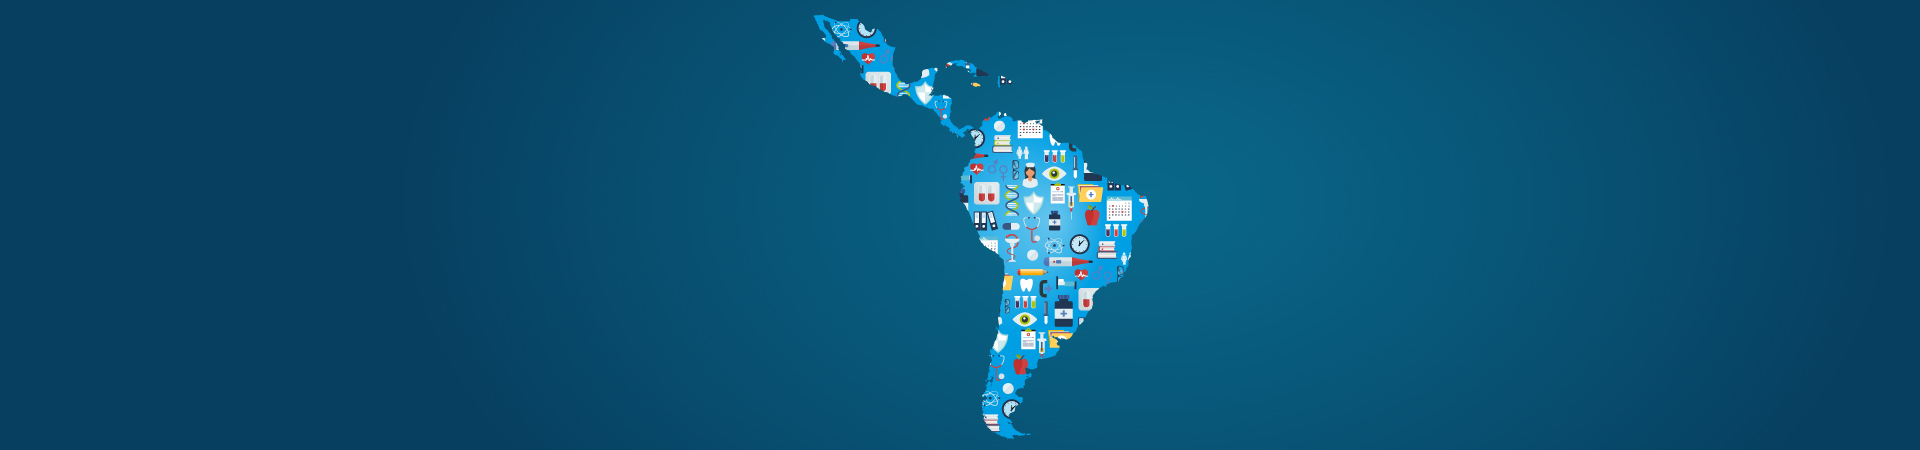 Latin American health systems